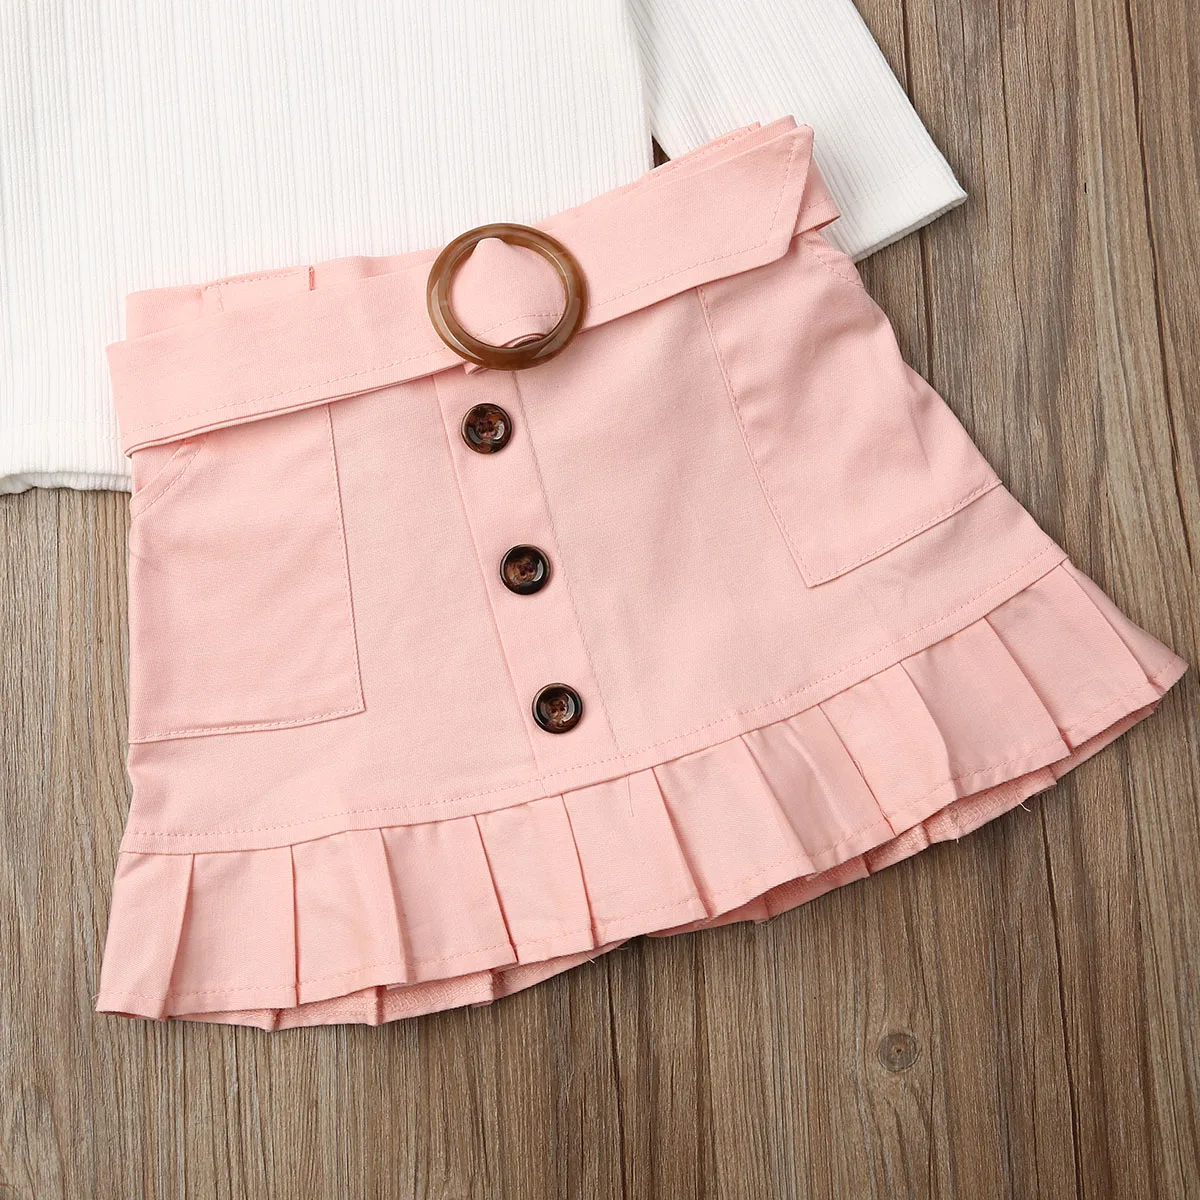 New Toddler Baby Kids Girl Winter Knit Tops Shirt+Button Mini Skirt Warm Outfits Set